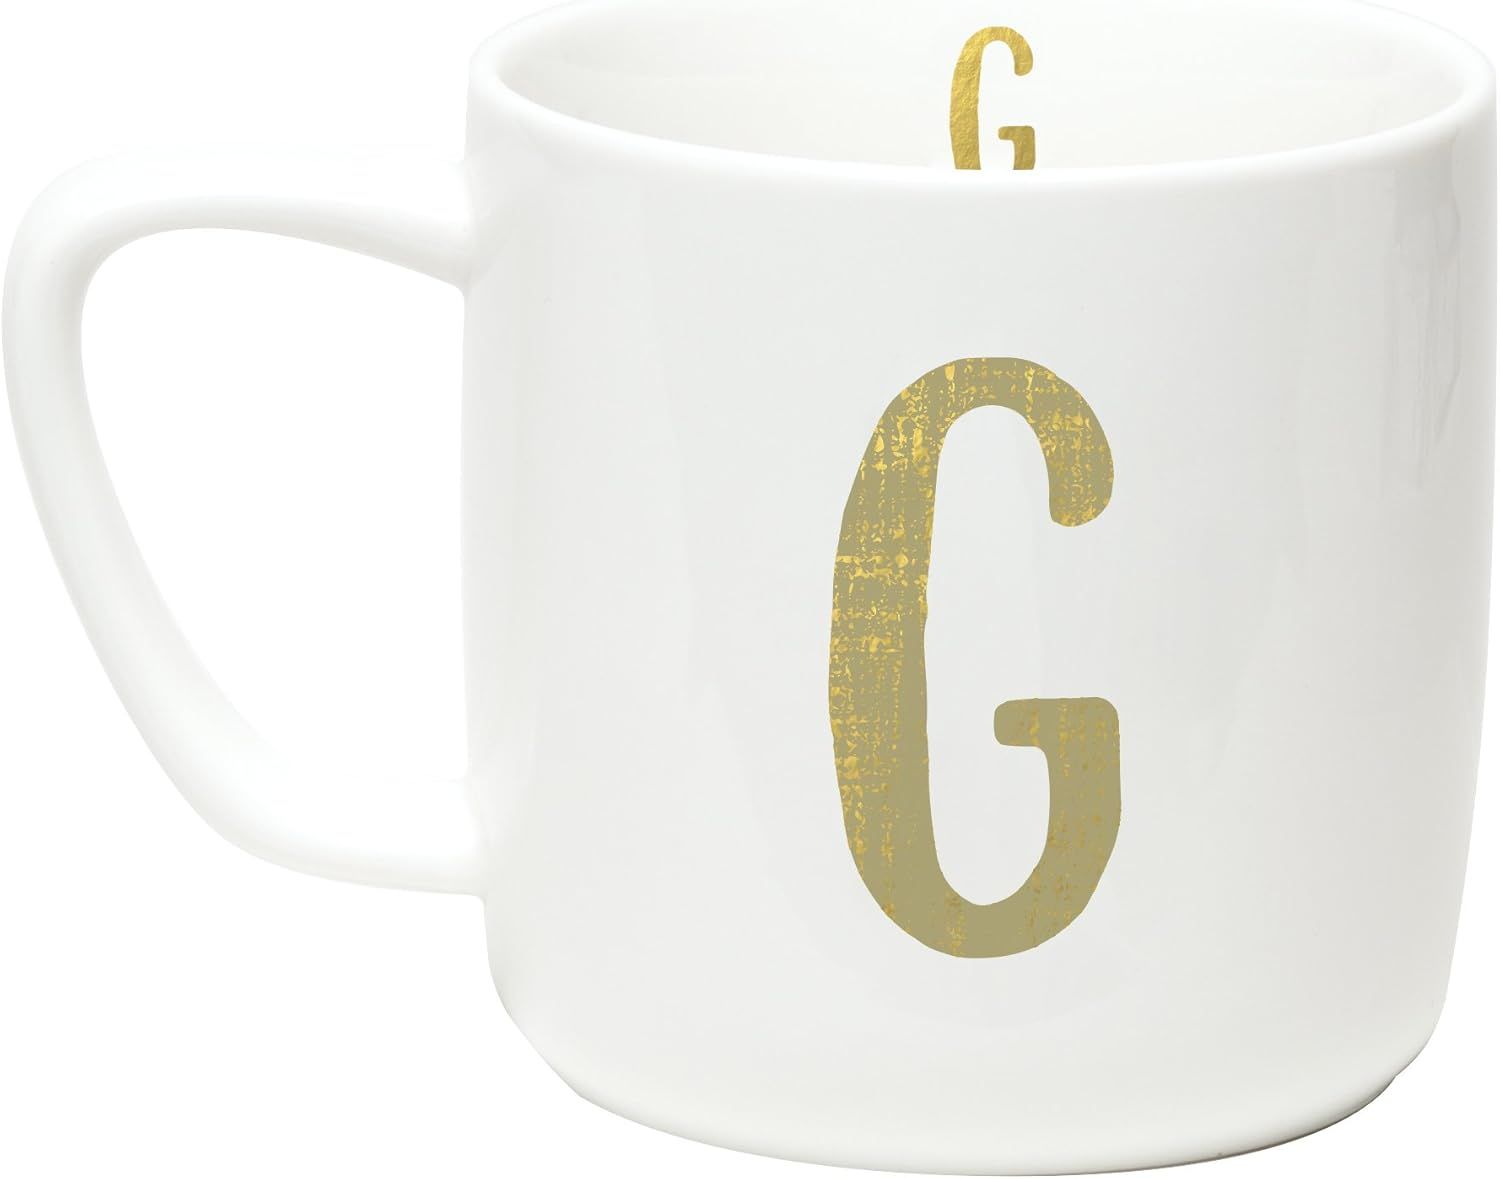 C.R. Gibson 12 ounce Porecelain Monogram Mug, Exterior & Interior Accented With Metallic Gold - G | Amazon (US)